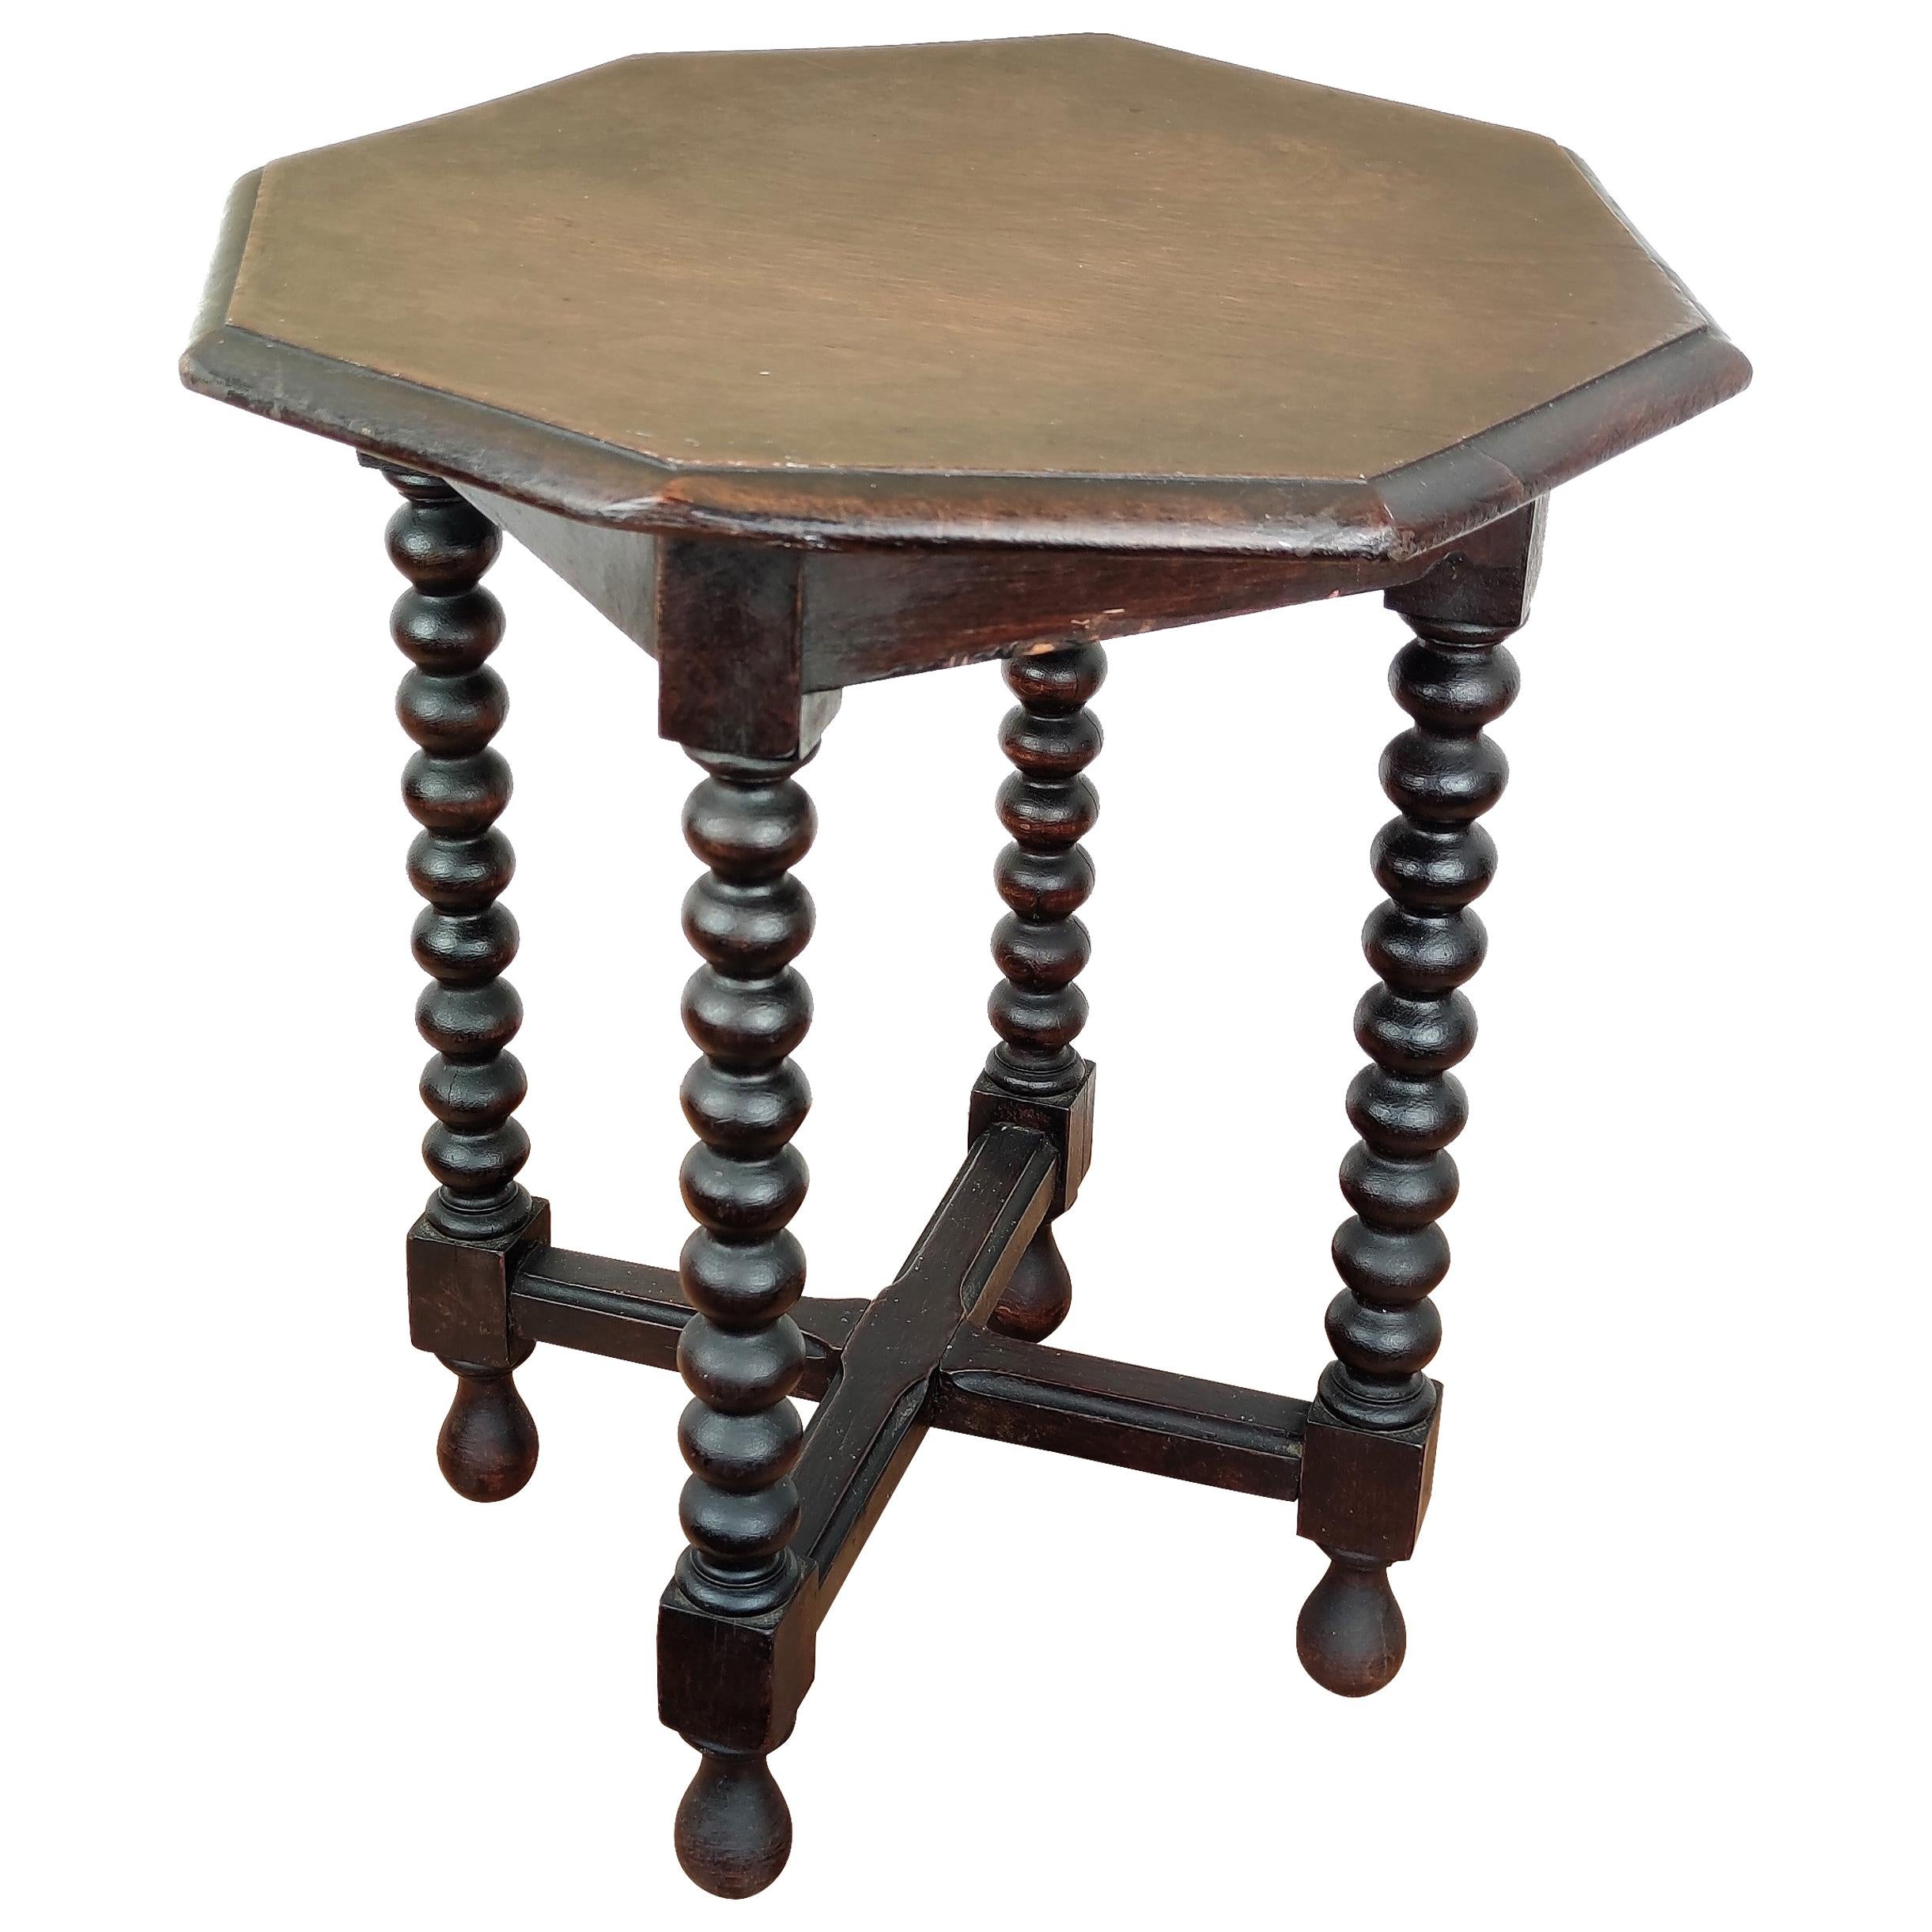 Antique Italian Octagonal Walnut Side Table or Stool with Bobbin Turned Legs